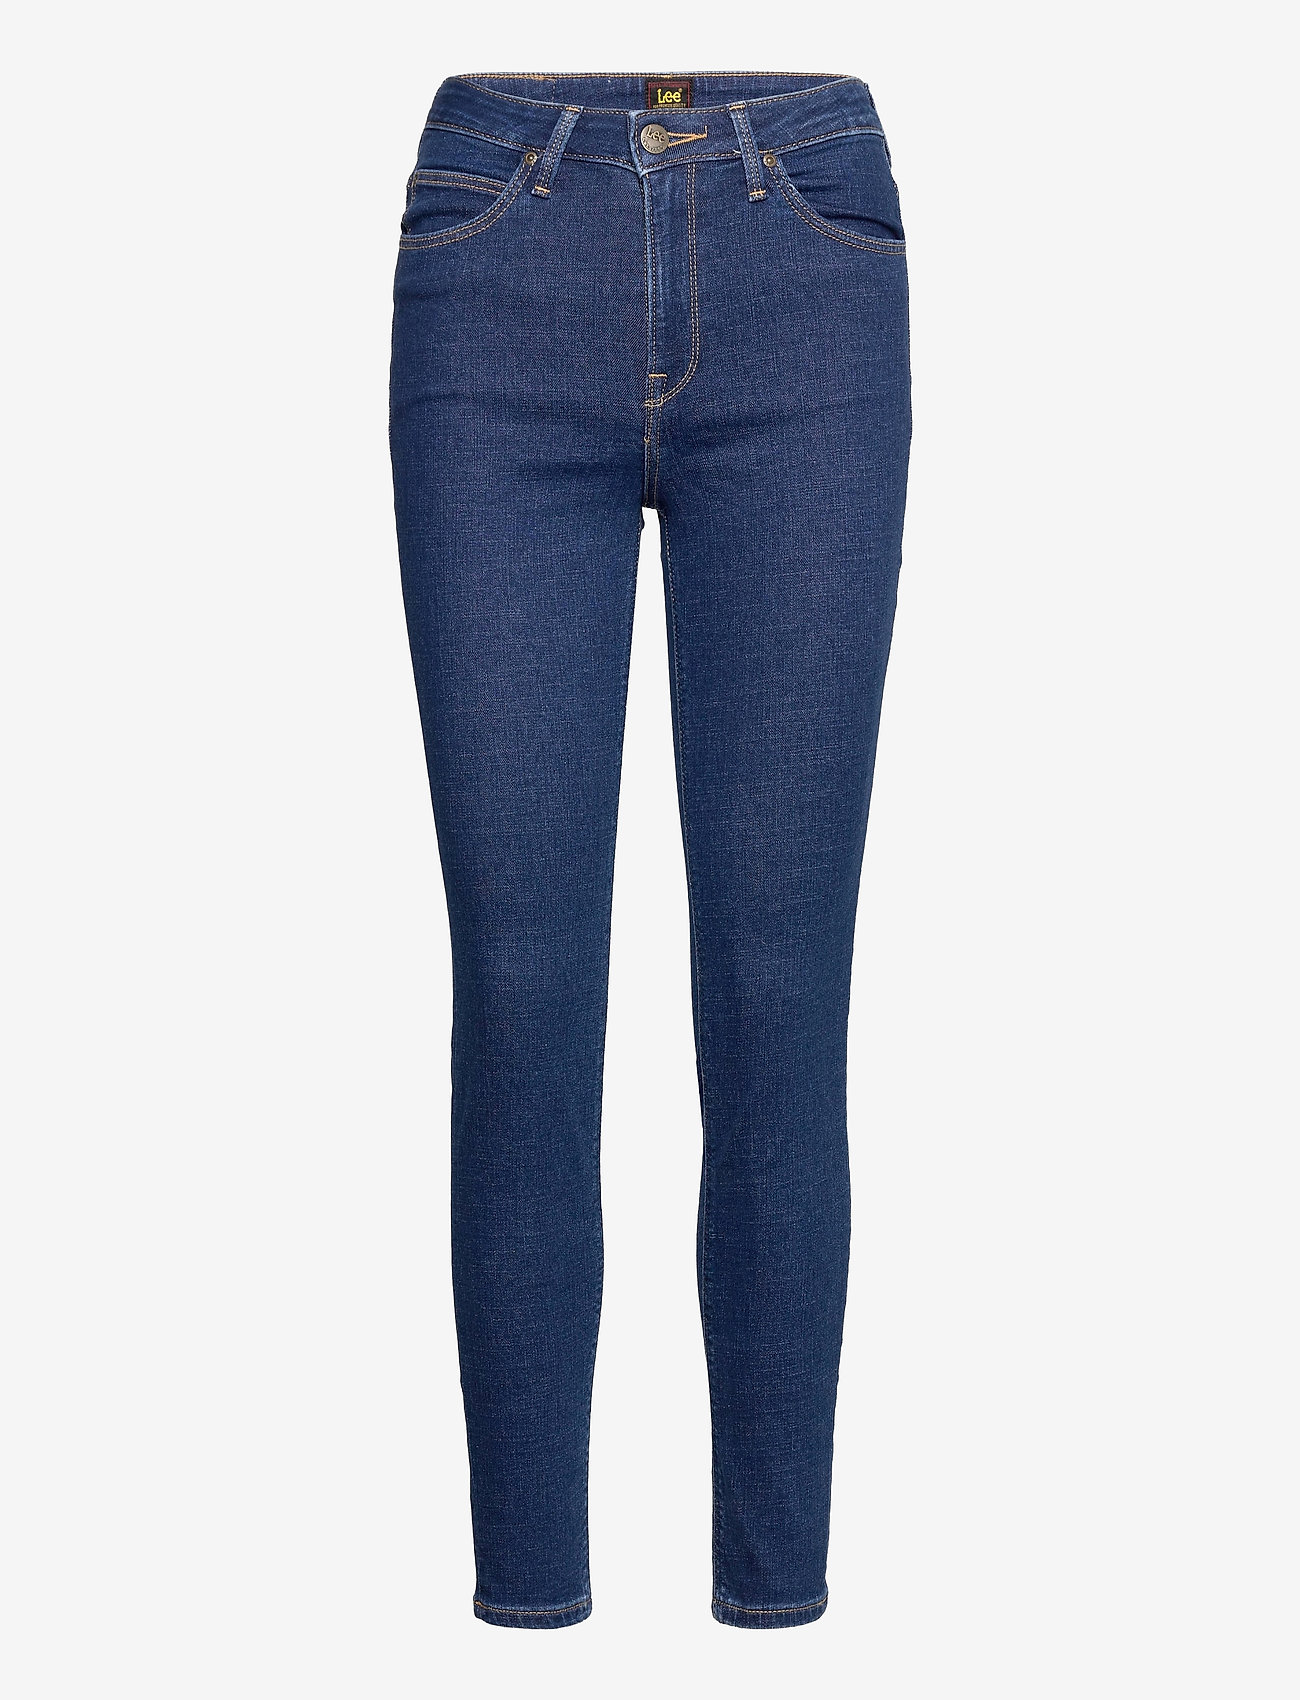 Lee Jeans - SCARLETT HIGH - skinny jeans - dark mono - 0